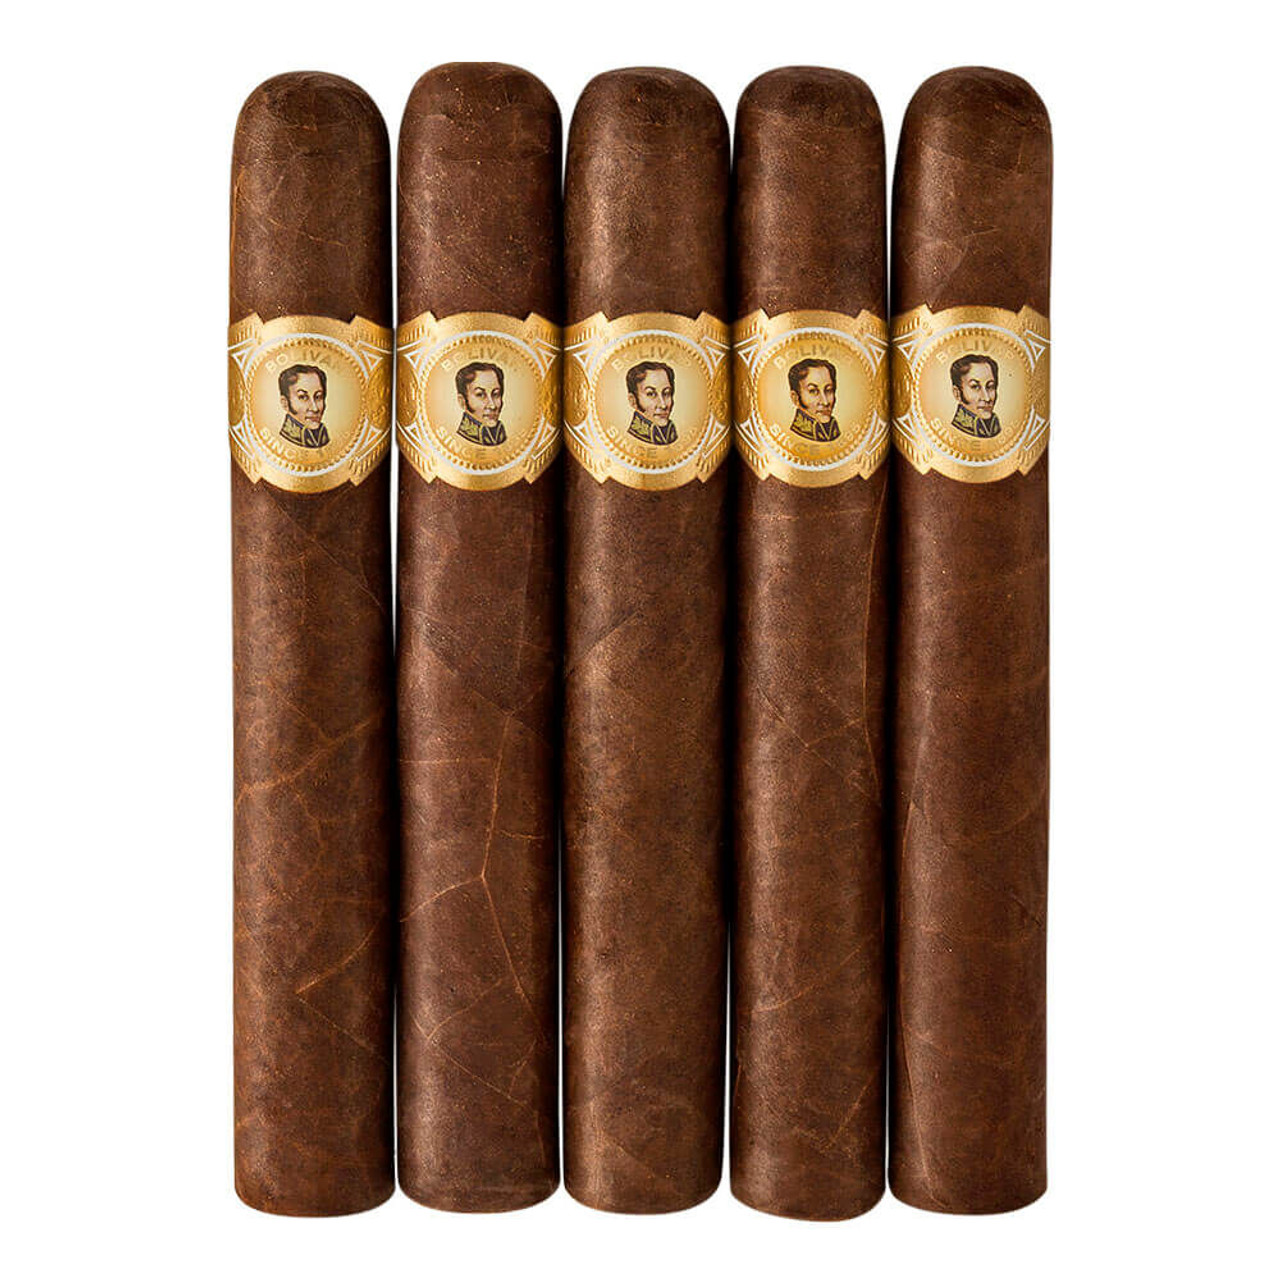 Bolivar Cofradia No. 554 Cigars - 5 x 54 (Pack of 5) *Box